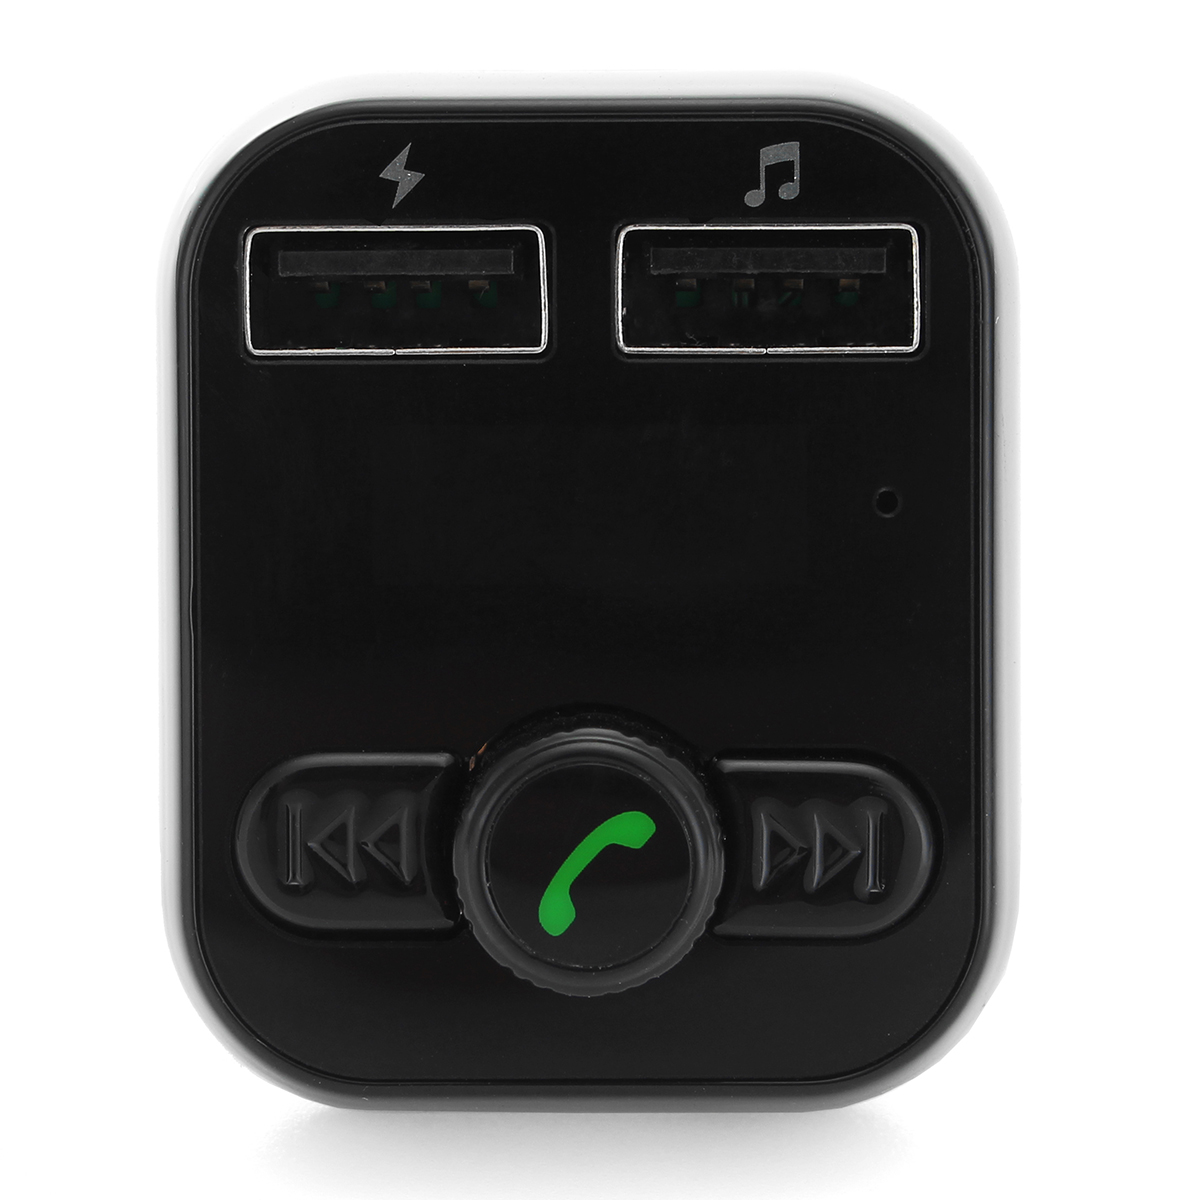 B-STAR New Car Bluetooth MP3 Audio Player Phone Handfree Kit Car Mp3 Player Bluetooth 4.0 Version